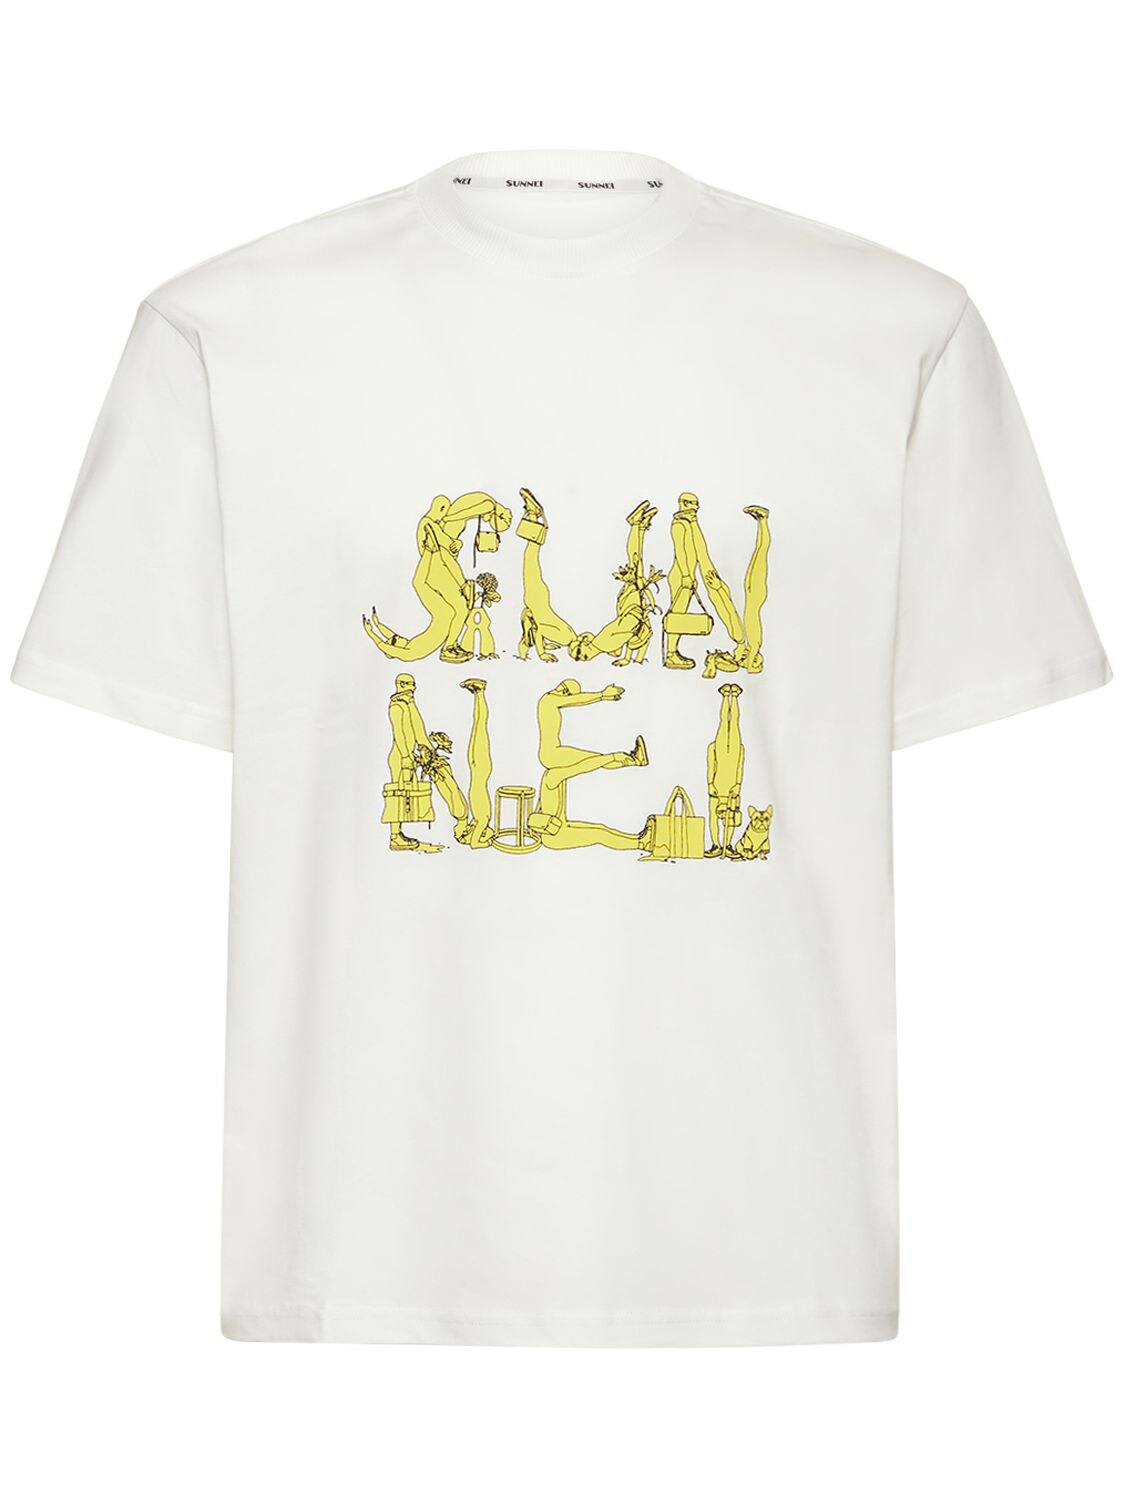 T-shirt En Jersey De Coton À Imprimé Logo - SUNNEI - Modalova